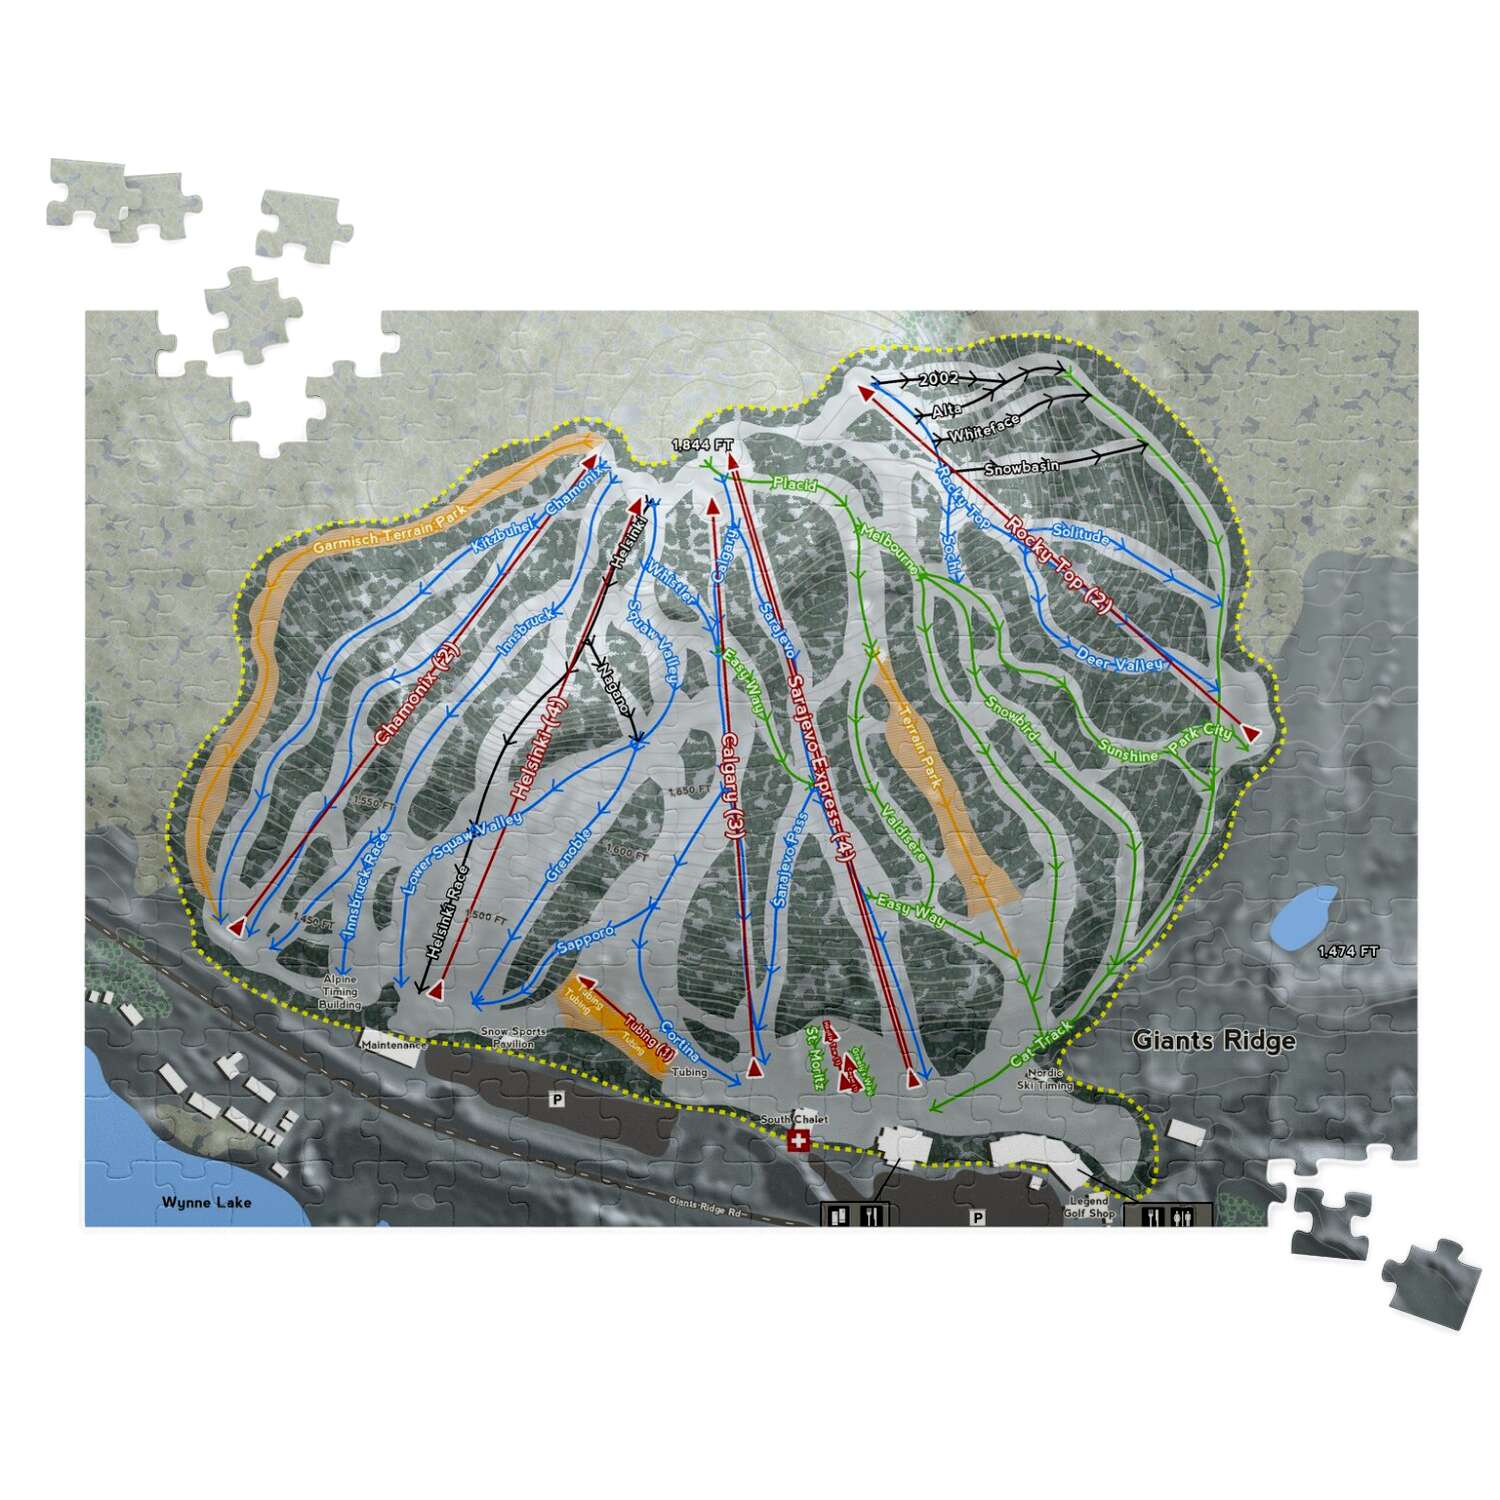 Giants Ridge Minnesota Ski Trail Map Puzzles - Powderaddicts